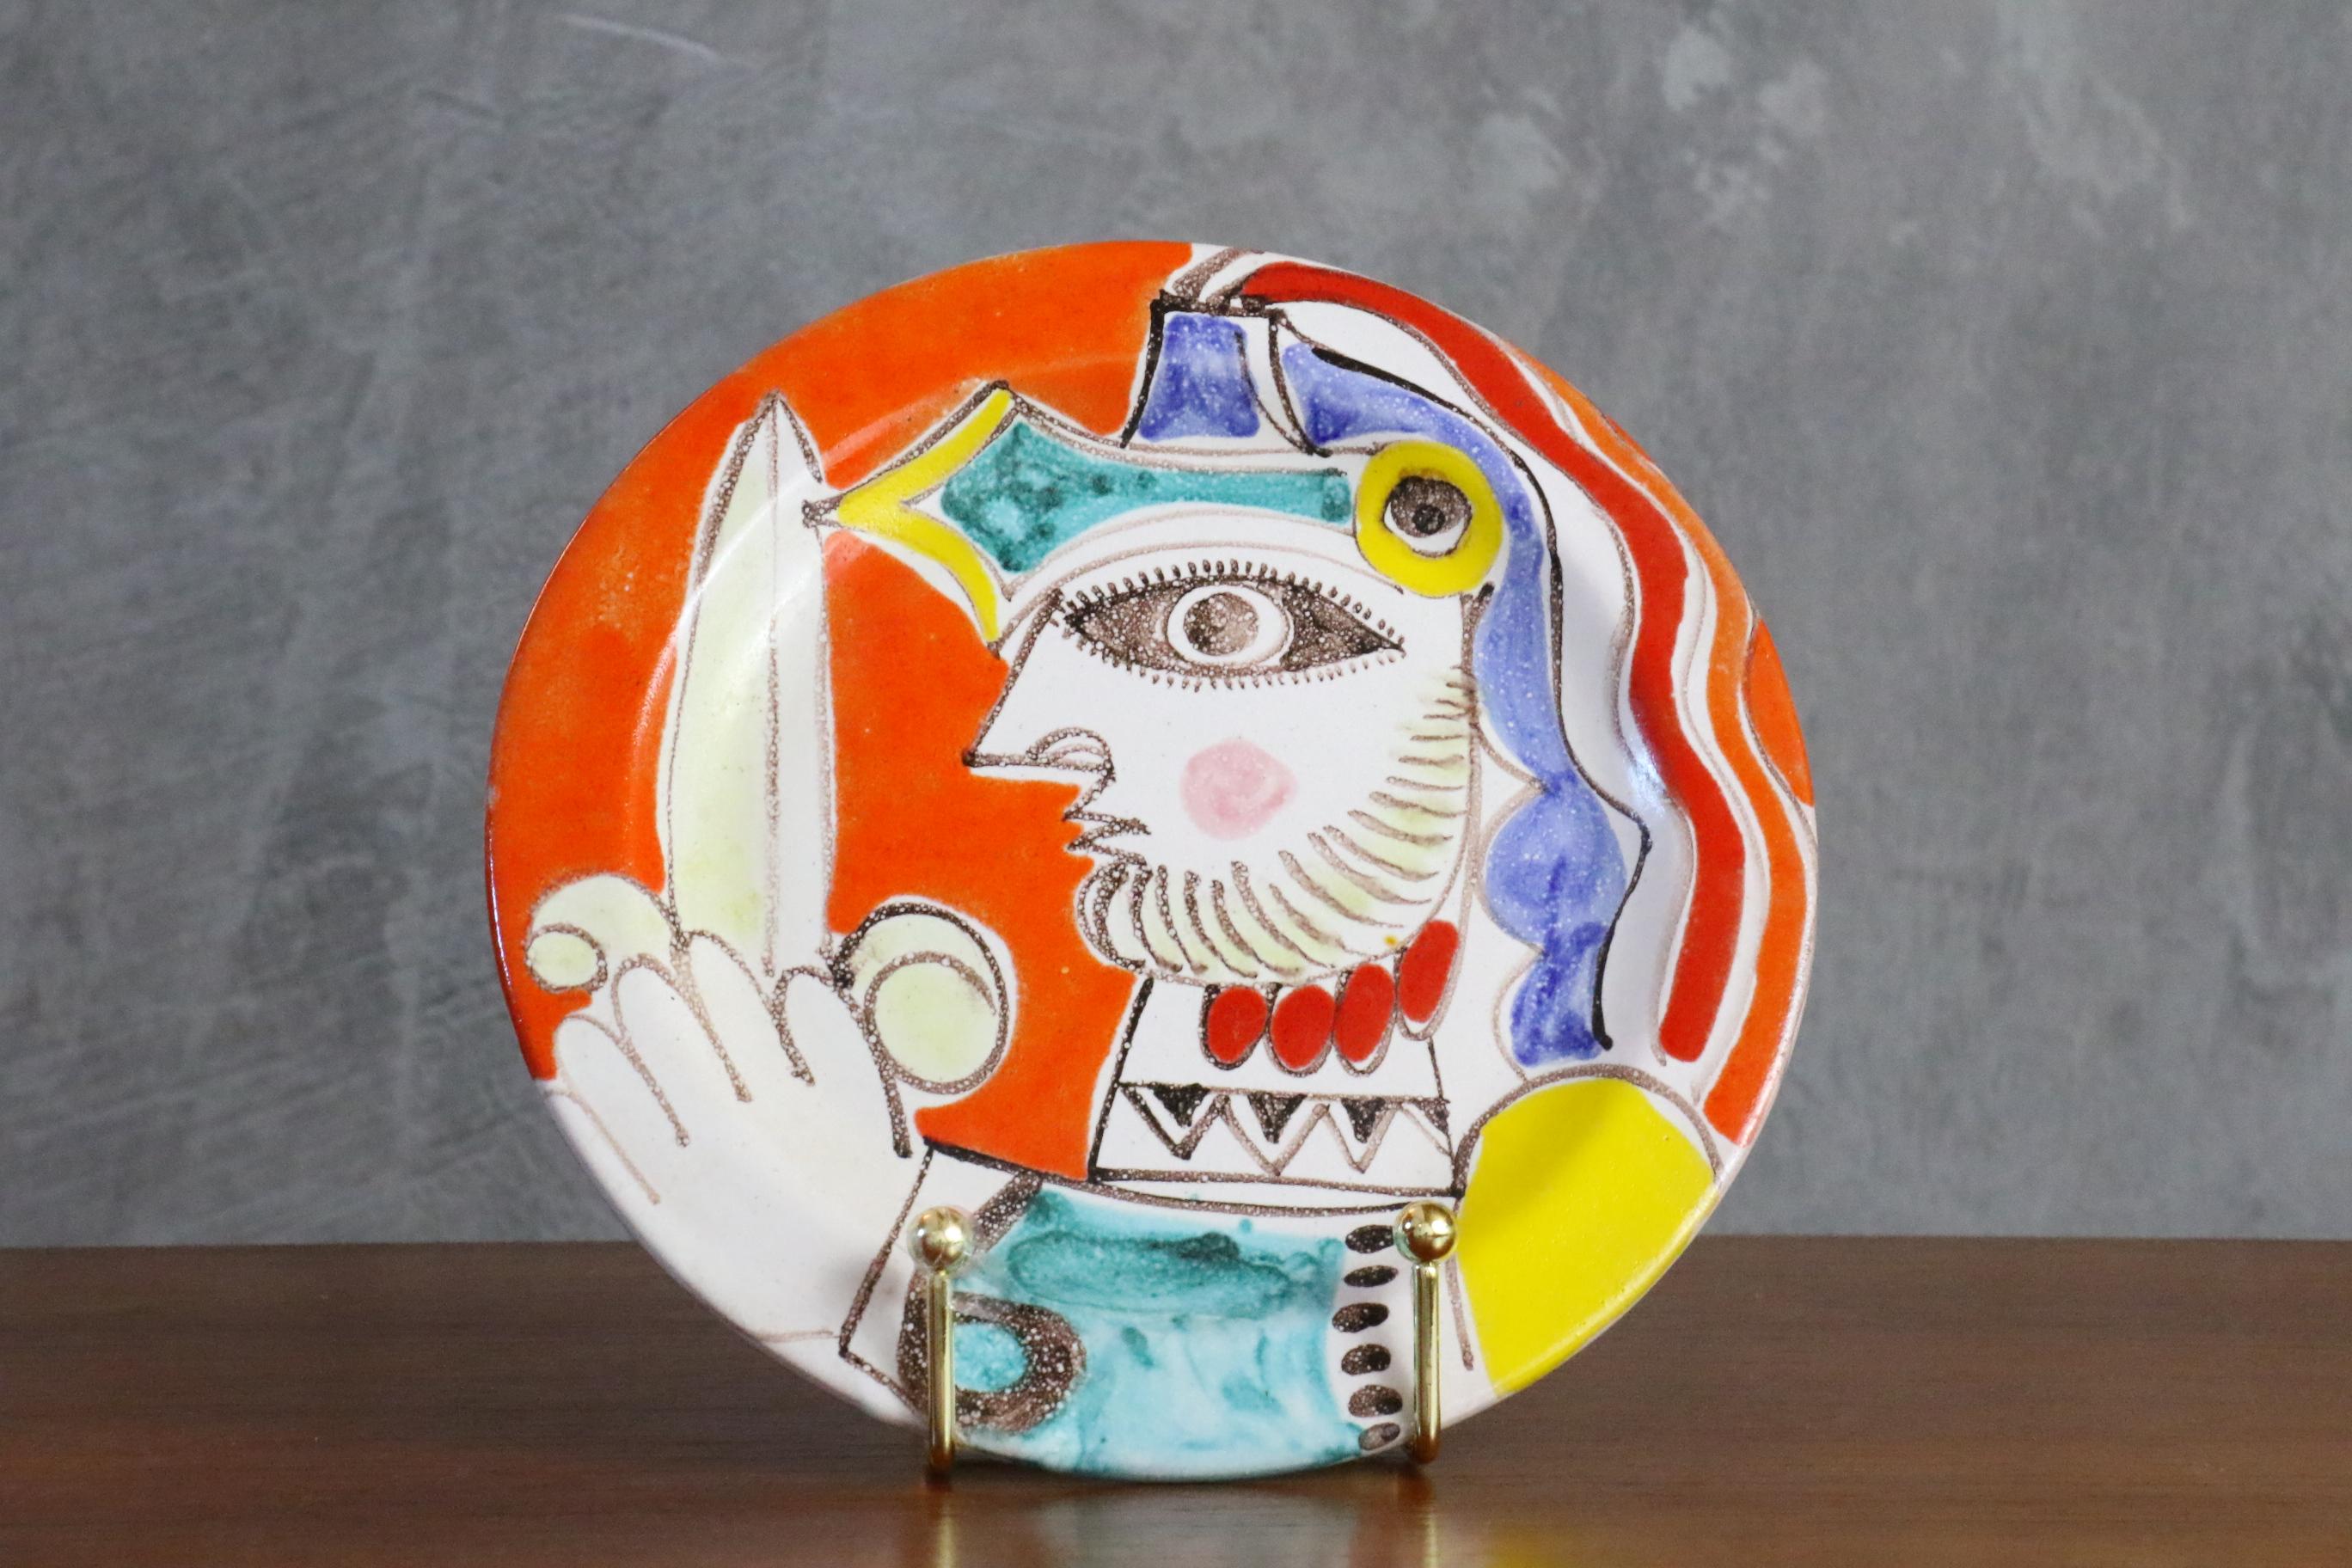 Mid-Century Modern DeSimone, Hand Painted Ceramic Plate, Italian Pottery circa 1960 Era Aldo Londi